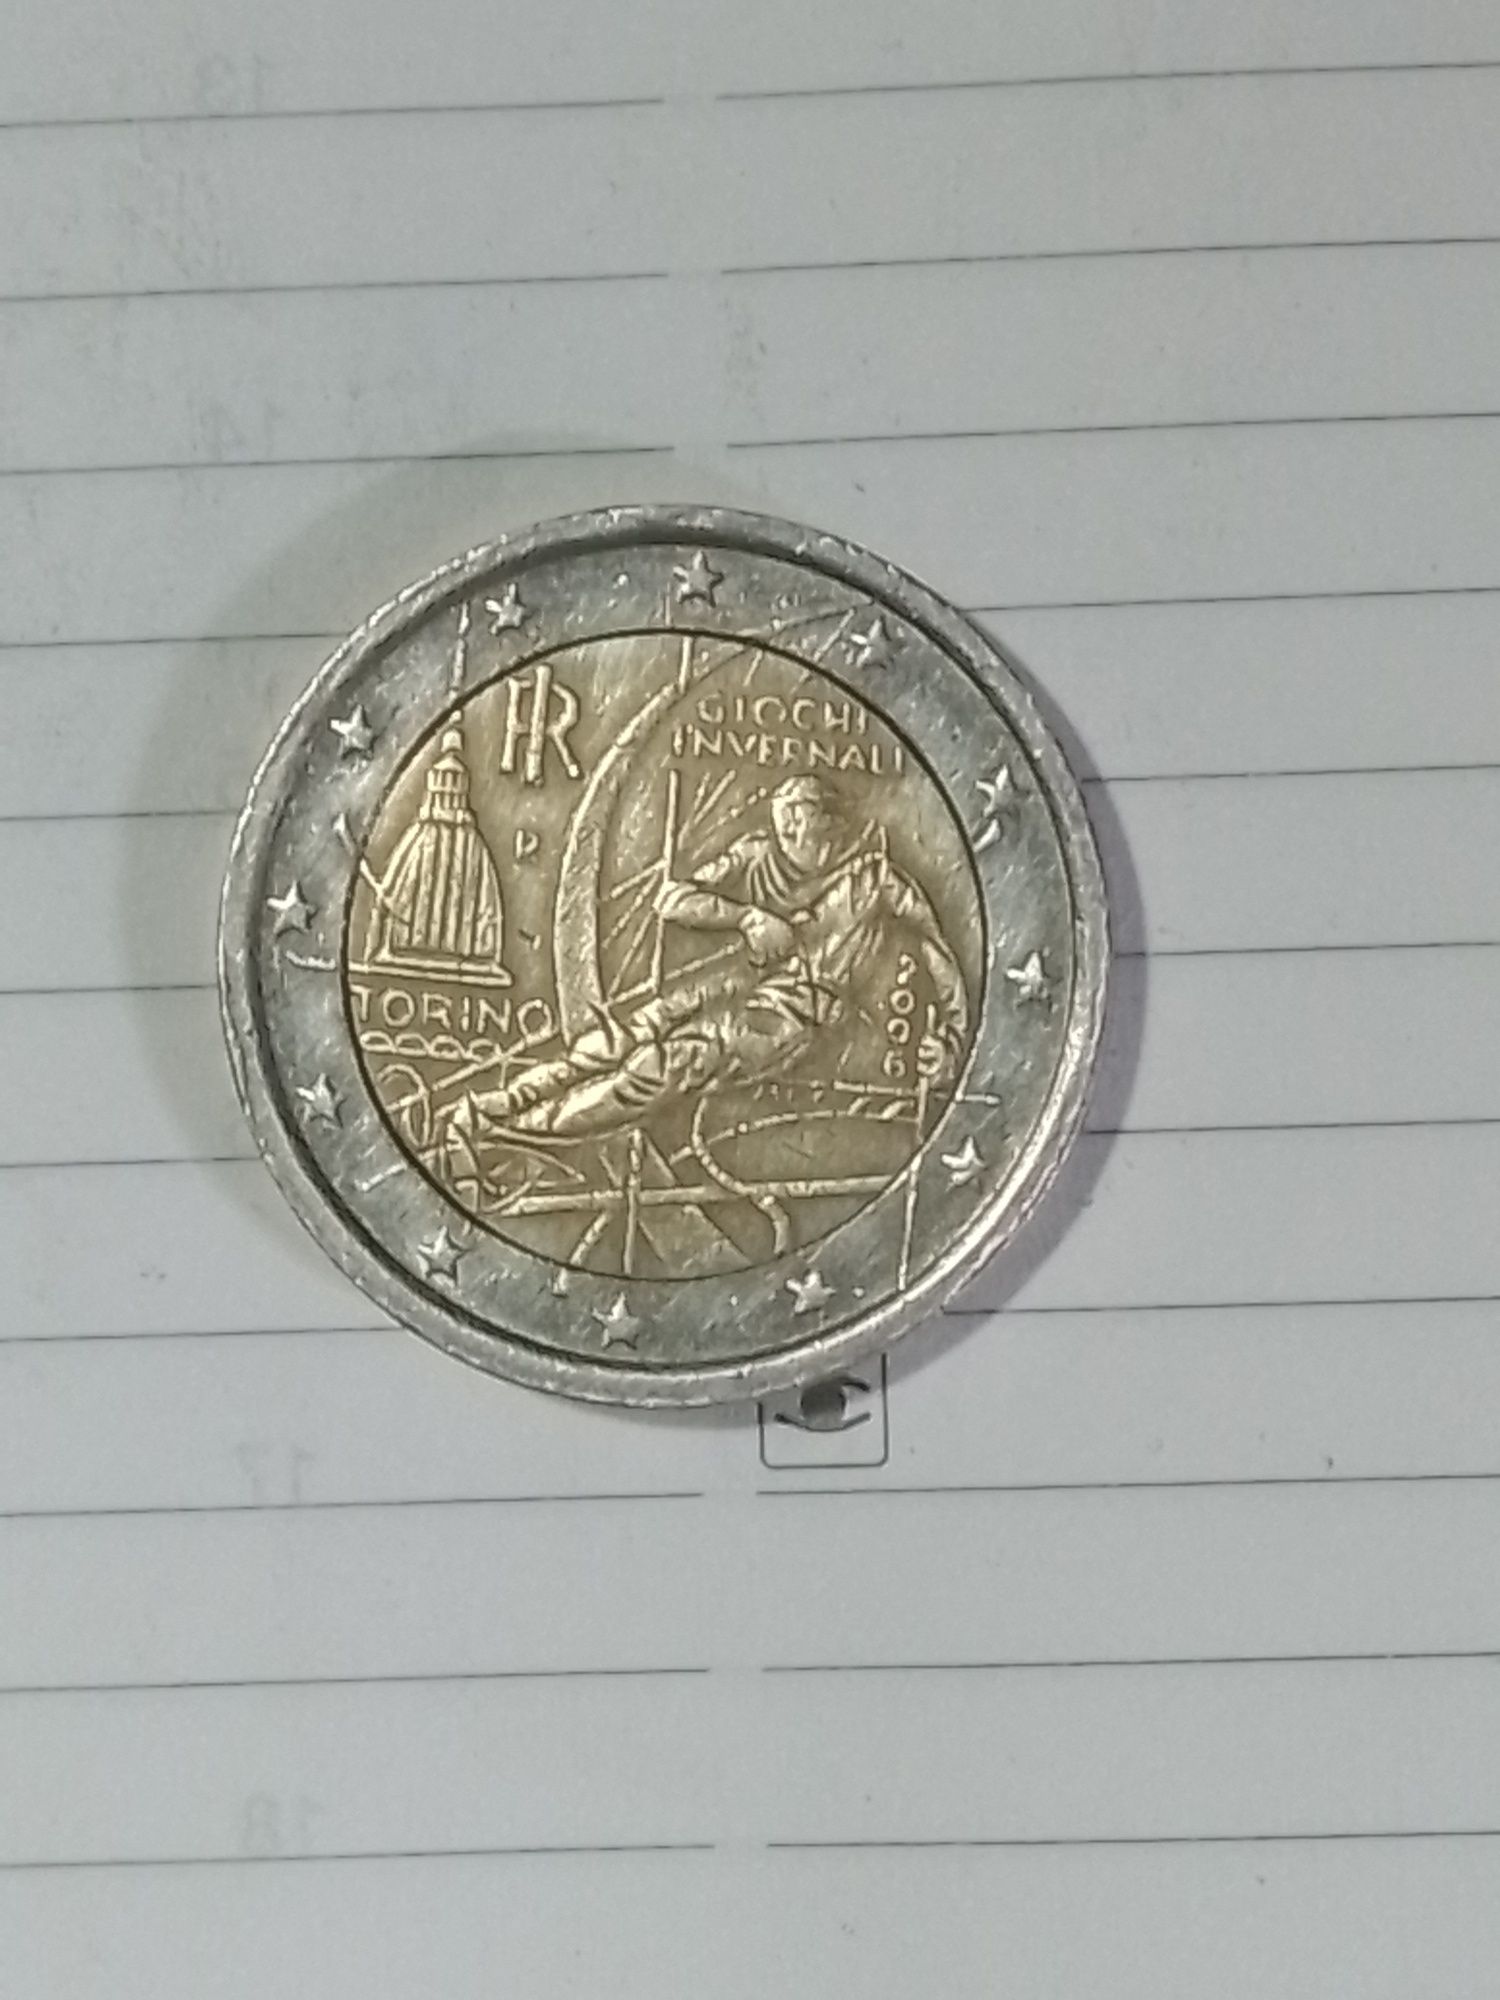 Ofer monede euro vechi din anii 2002